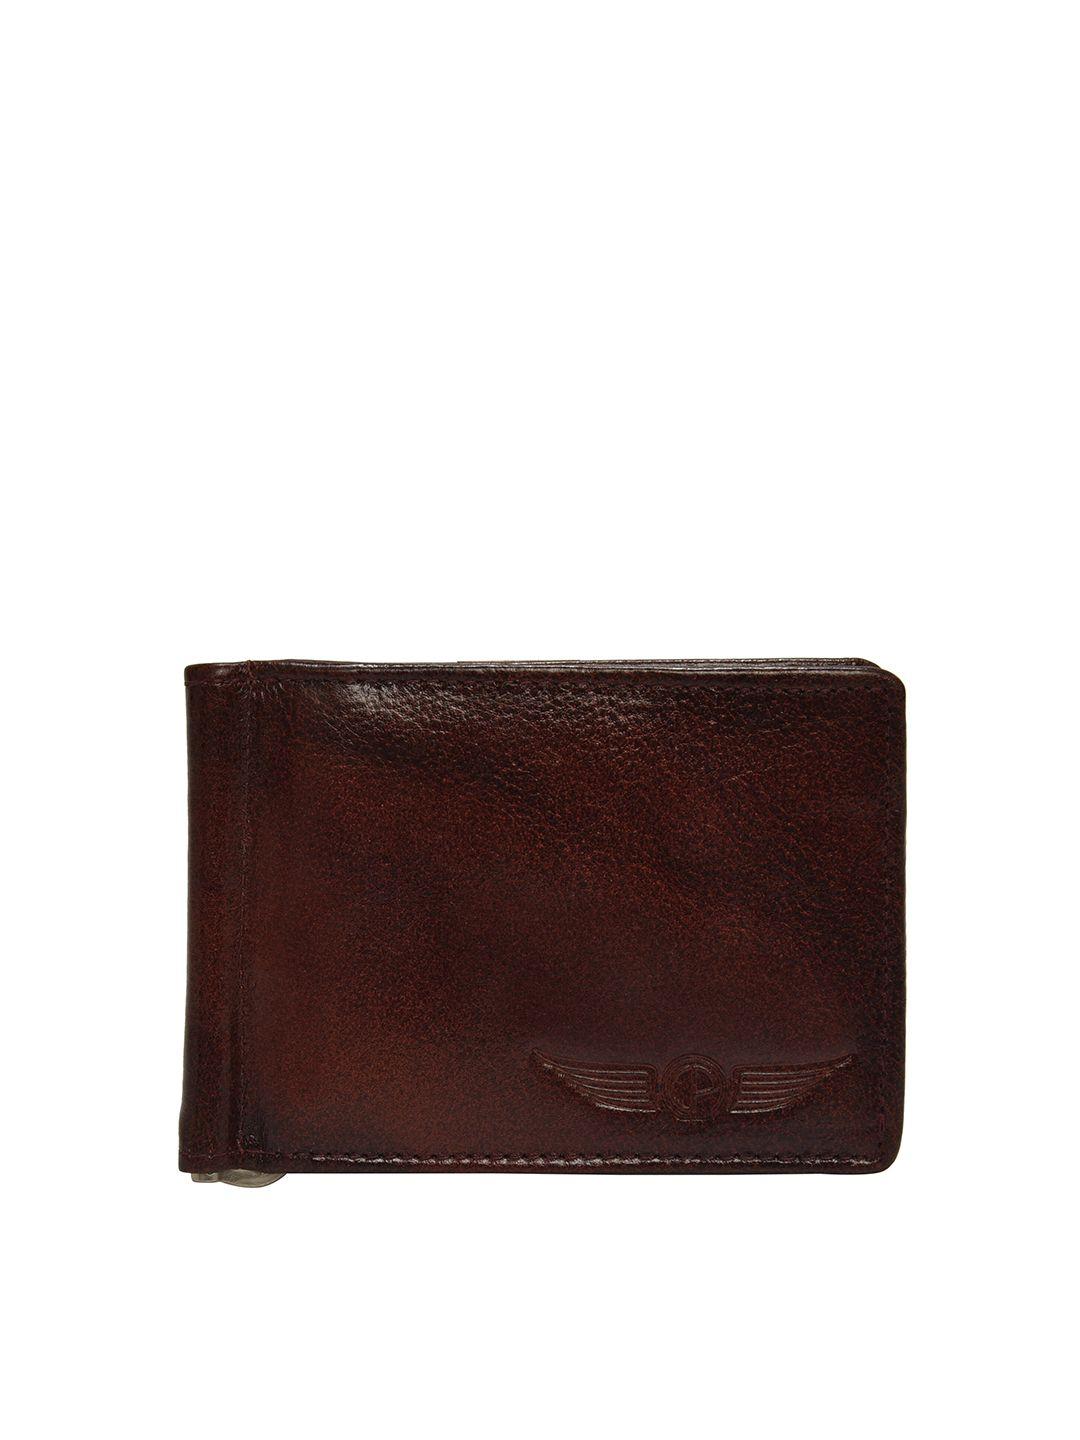 christopolo men maroon textured leather card holder